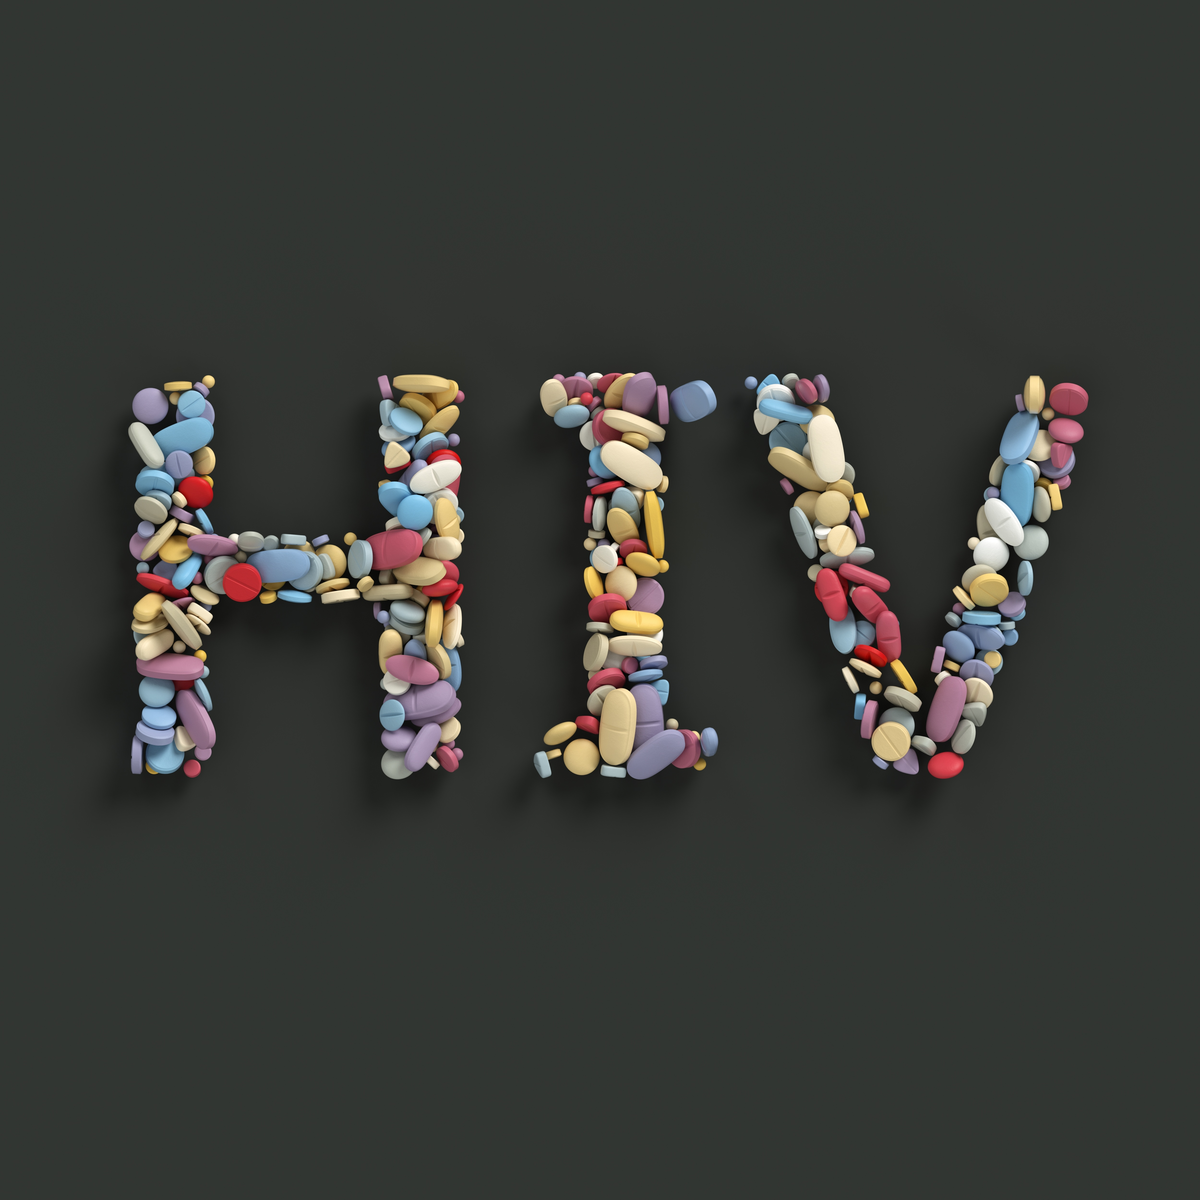 Positive Results at 96 Weeks for First Complete Darunavir-Based Single-Tablet Regimen for HIV